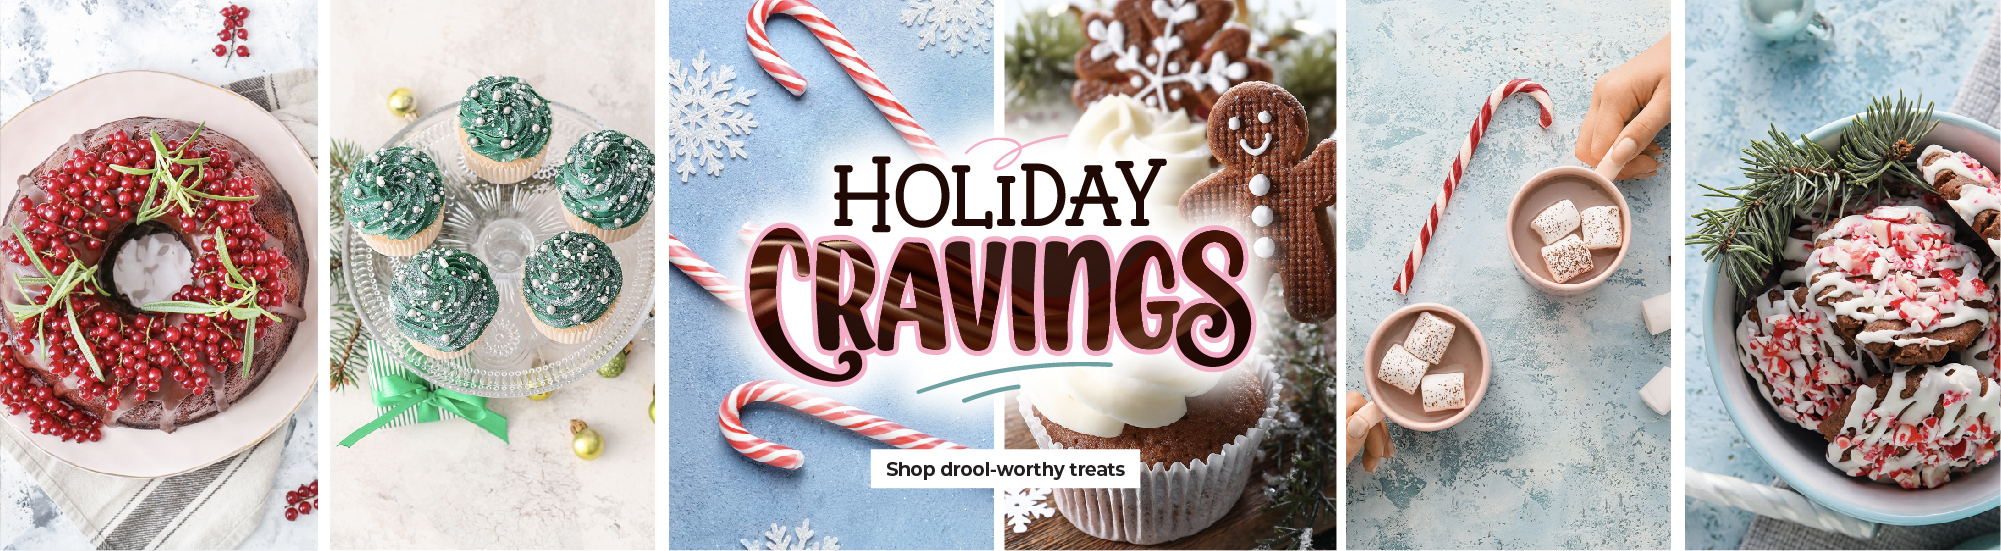 Holiday Cravings